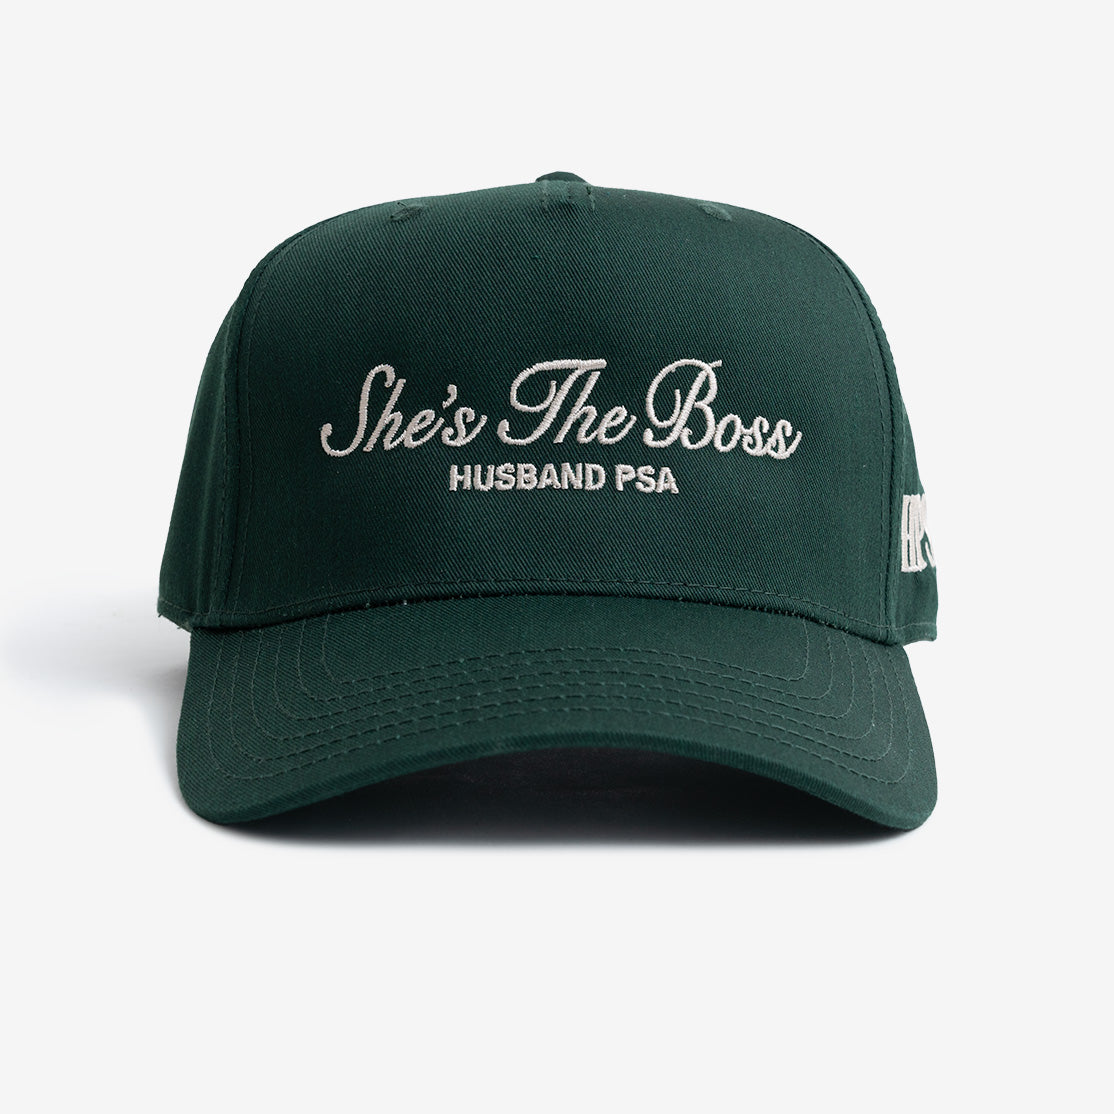 She's The Boss Hat (Green/Beige) – Husband PSA